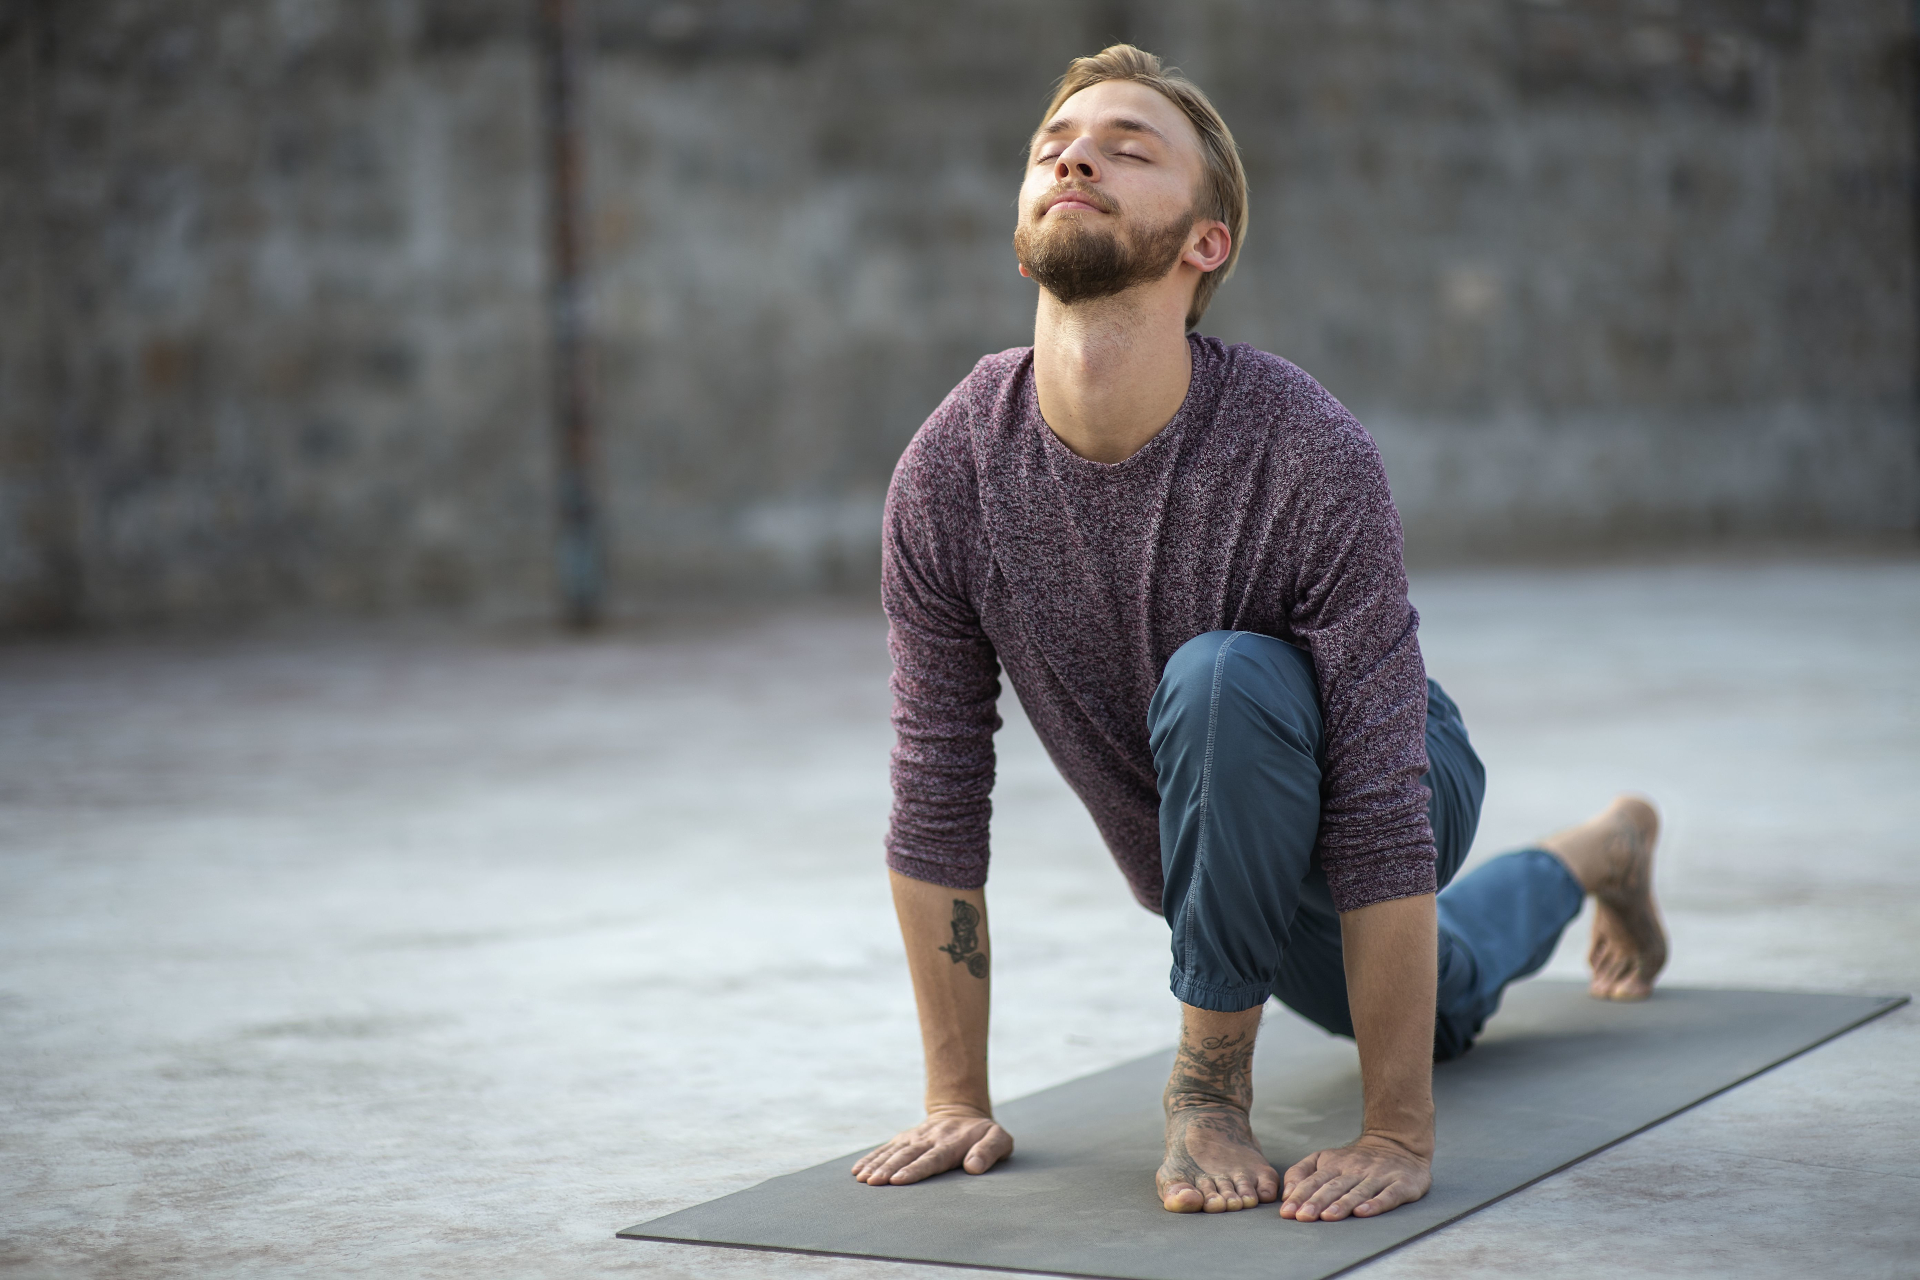 Isha Hatha Yoga Meditation Sadhguru